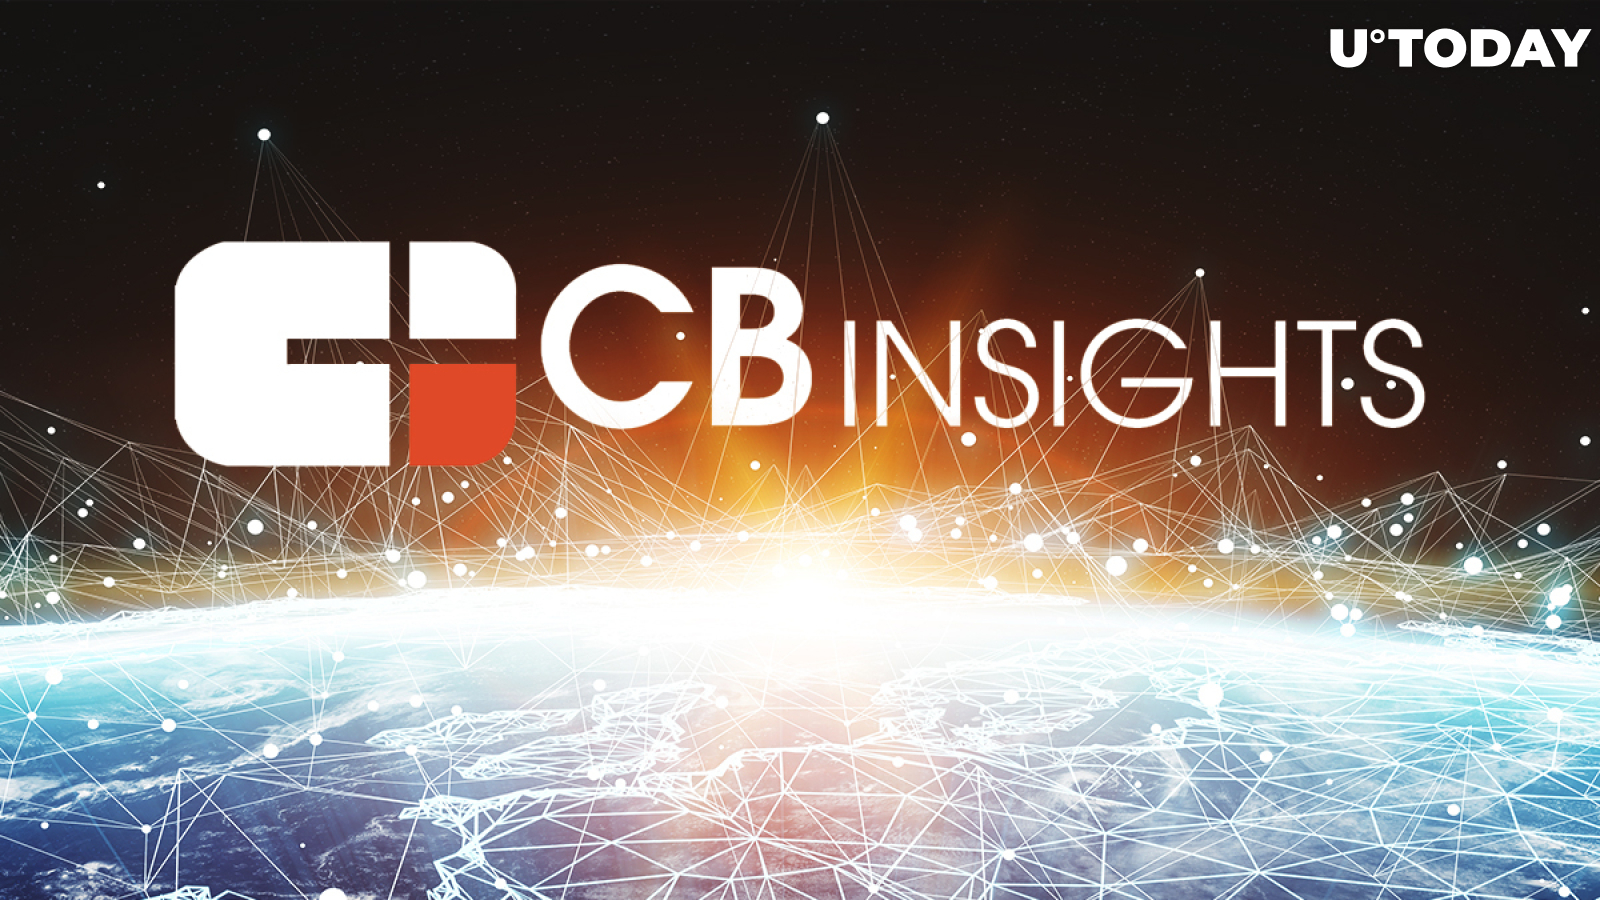 CB Insights Analytics Vendor Breaks Into Crypto With Blockchain Company Acquisition